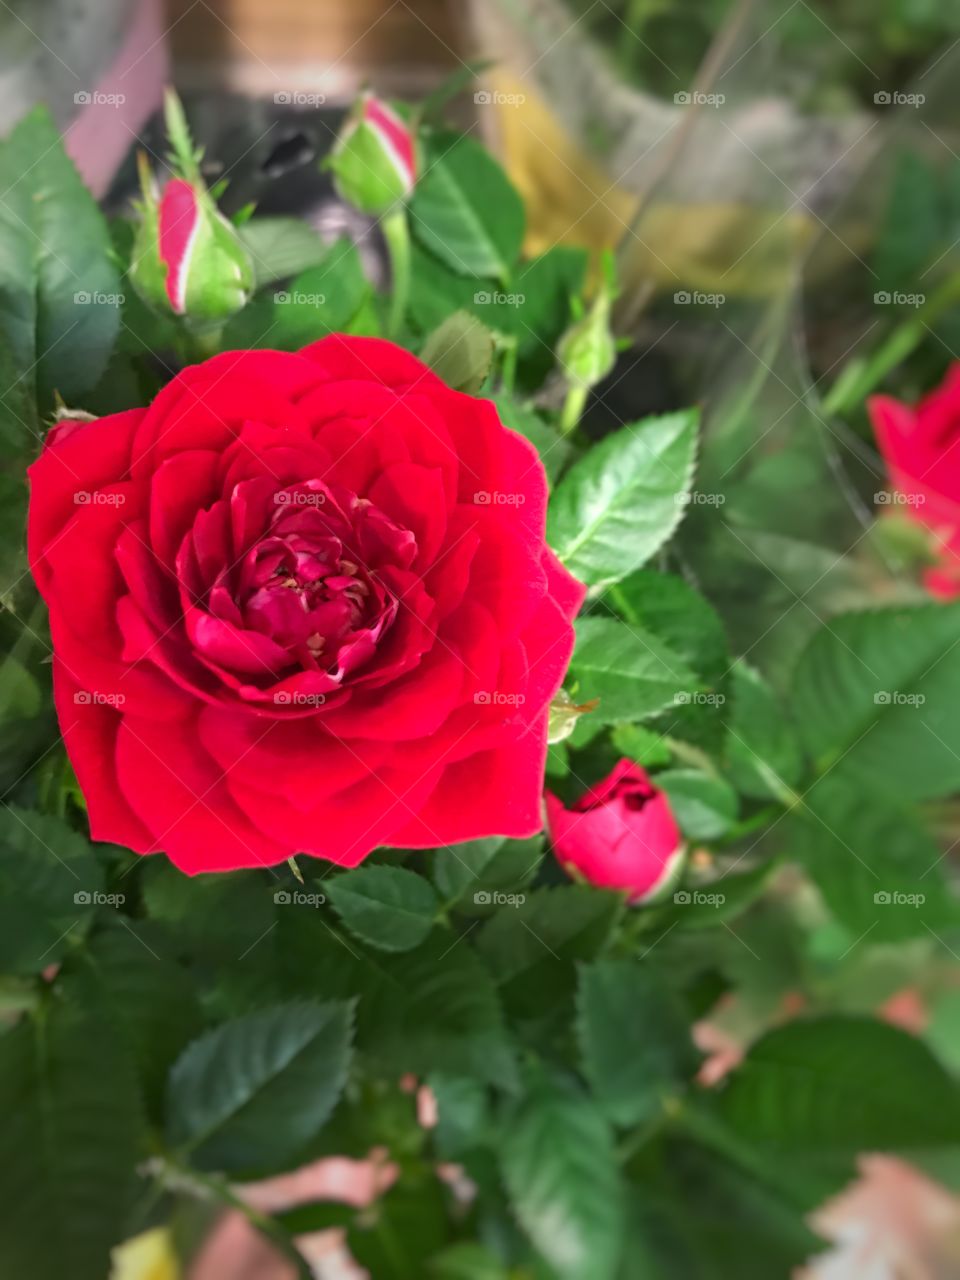 #rose #closeup #macro  #petals #red 